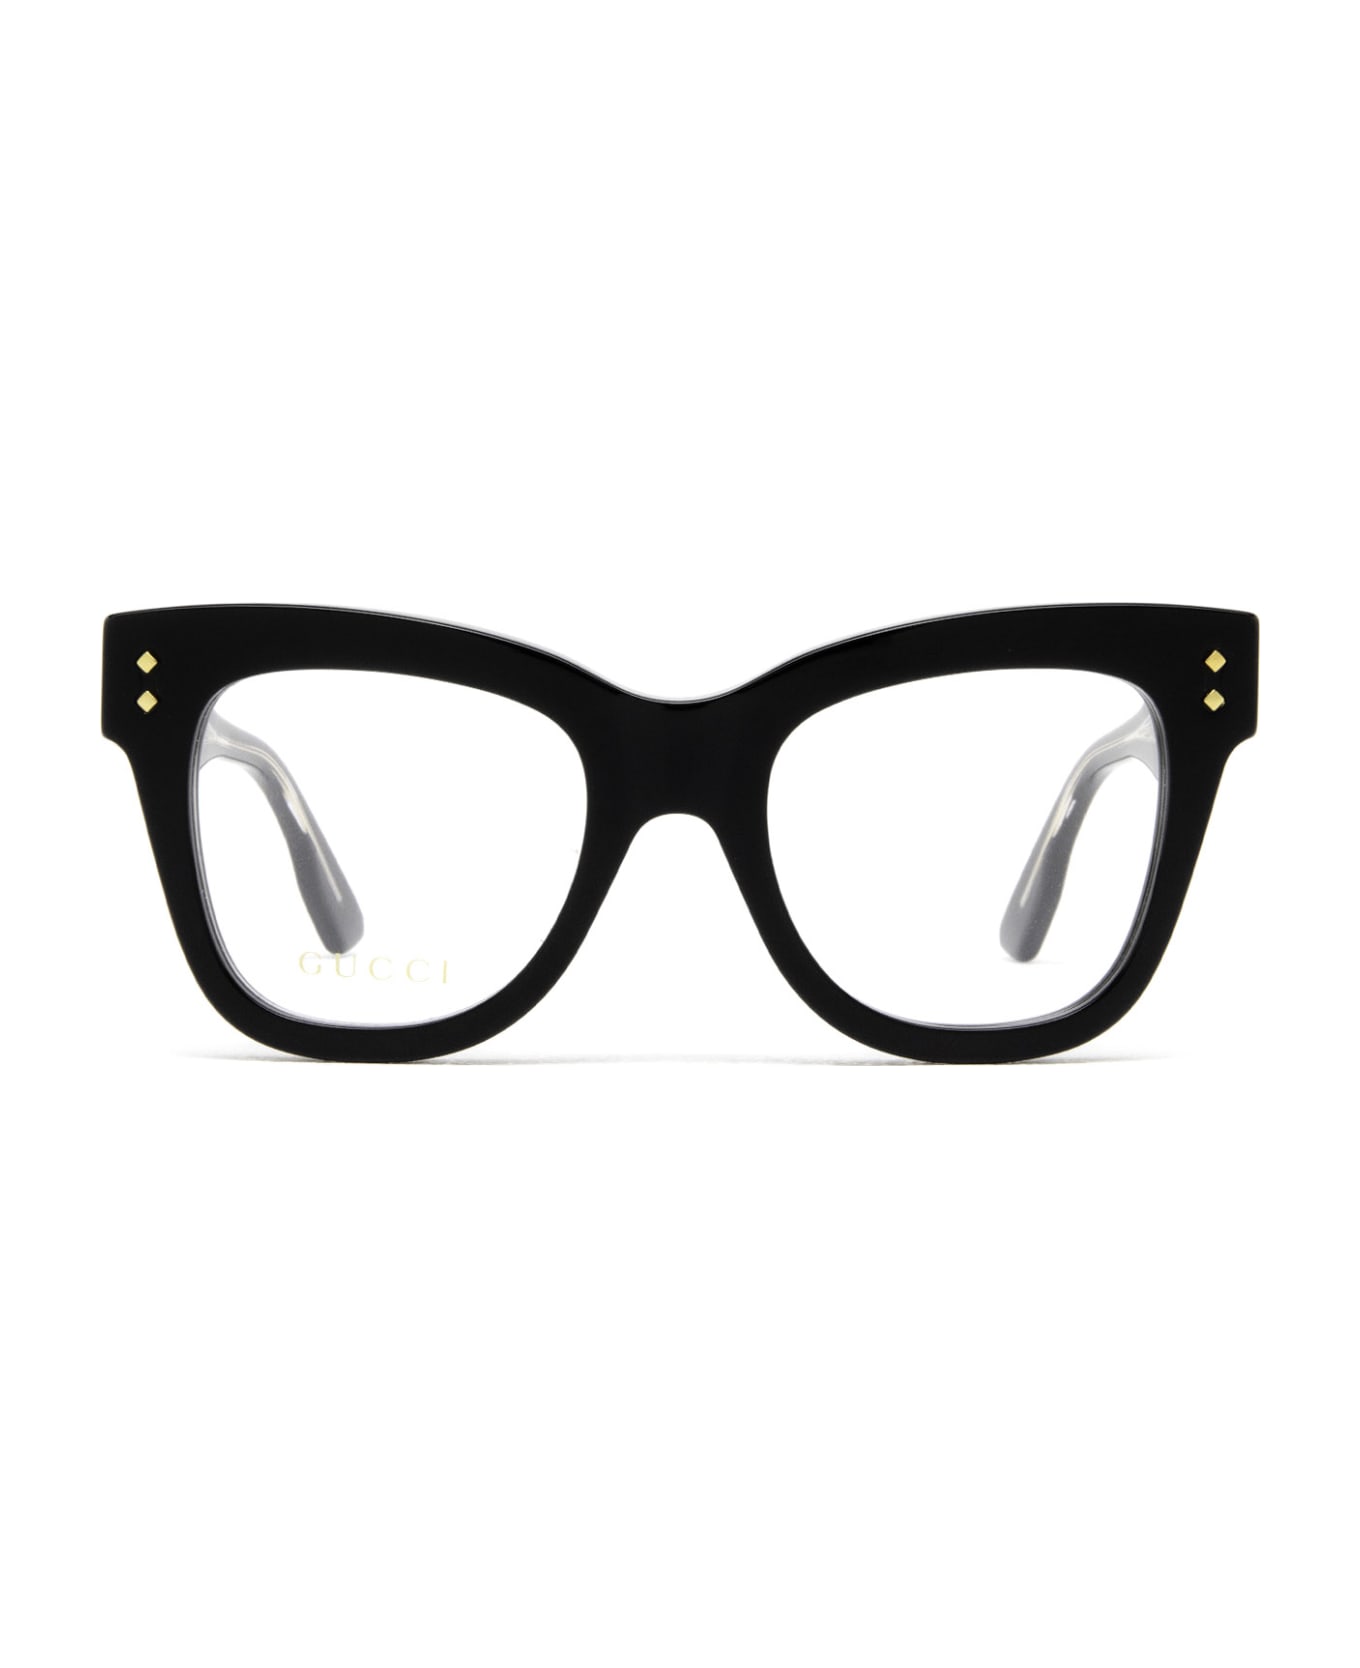 Gucci Eyewear Gg1082o Black Glasses - Black アイウェア